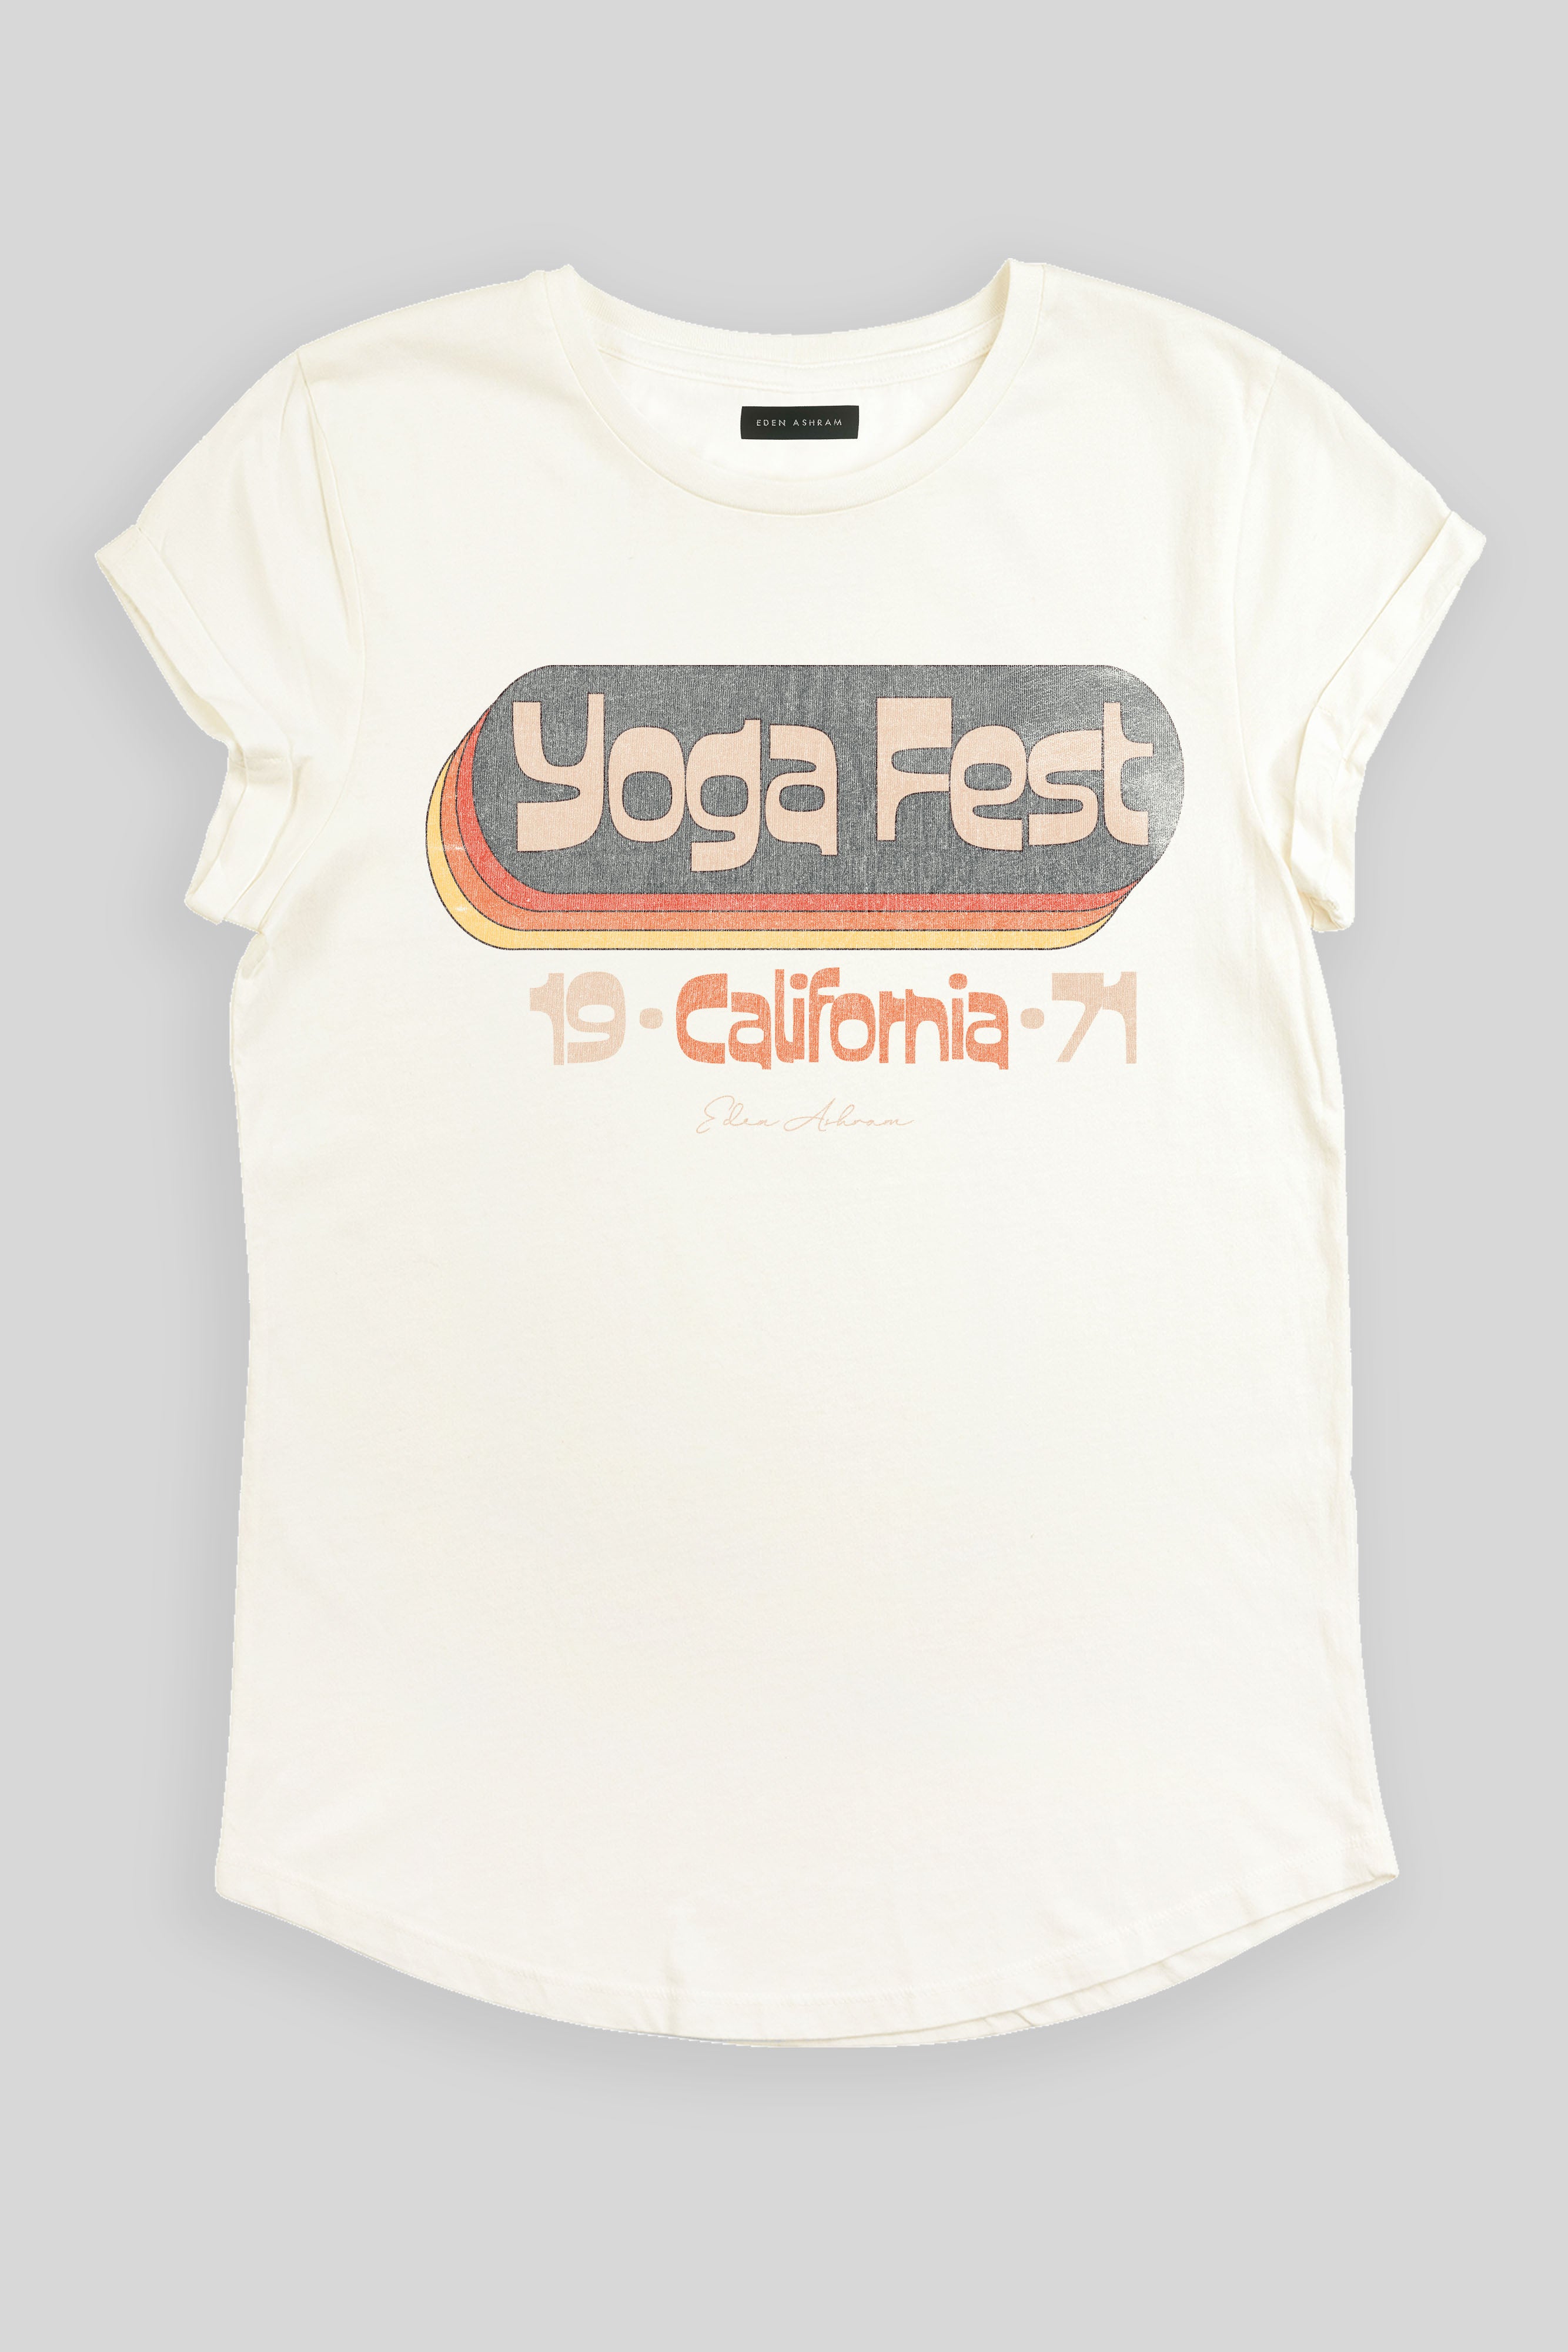 EDEN ASHRAM Yoga Fest Stonewash Rolled Sleeve Tour T-Shirt Stonewash White